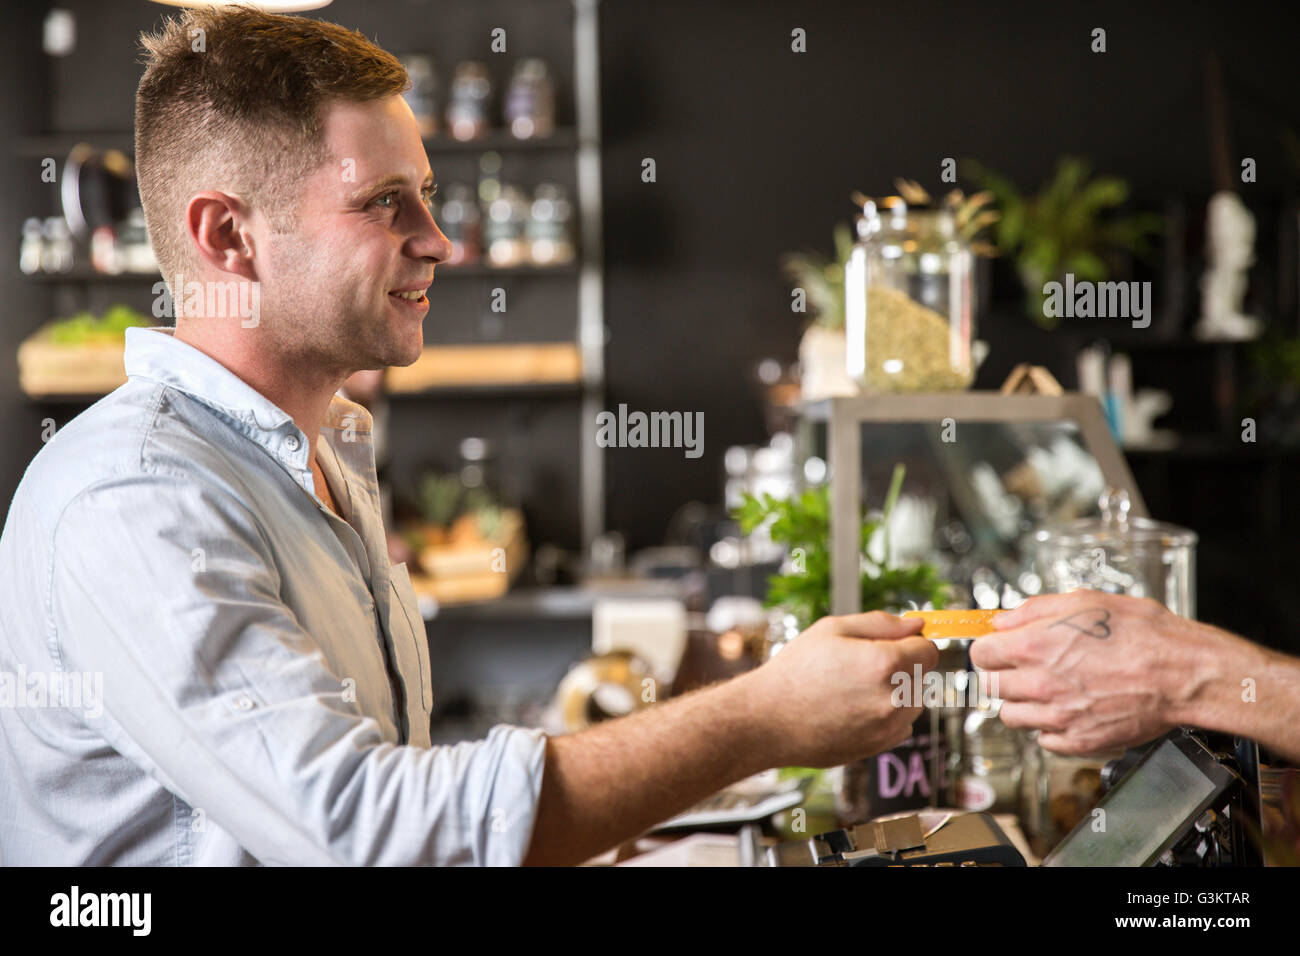 Customer handing smiling restaurant worker credit card Stock Photo